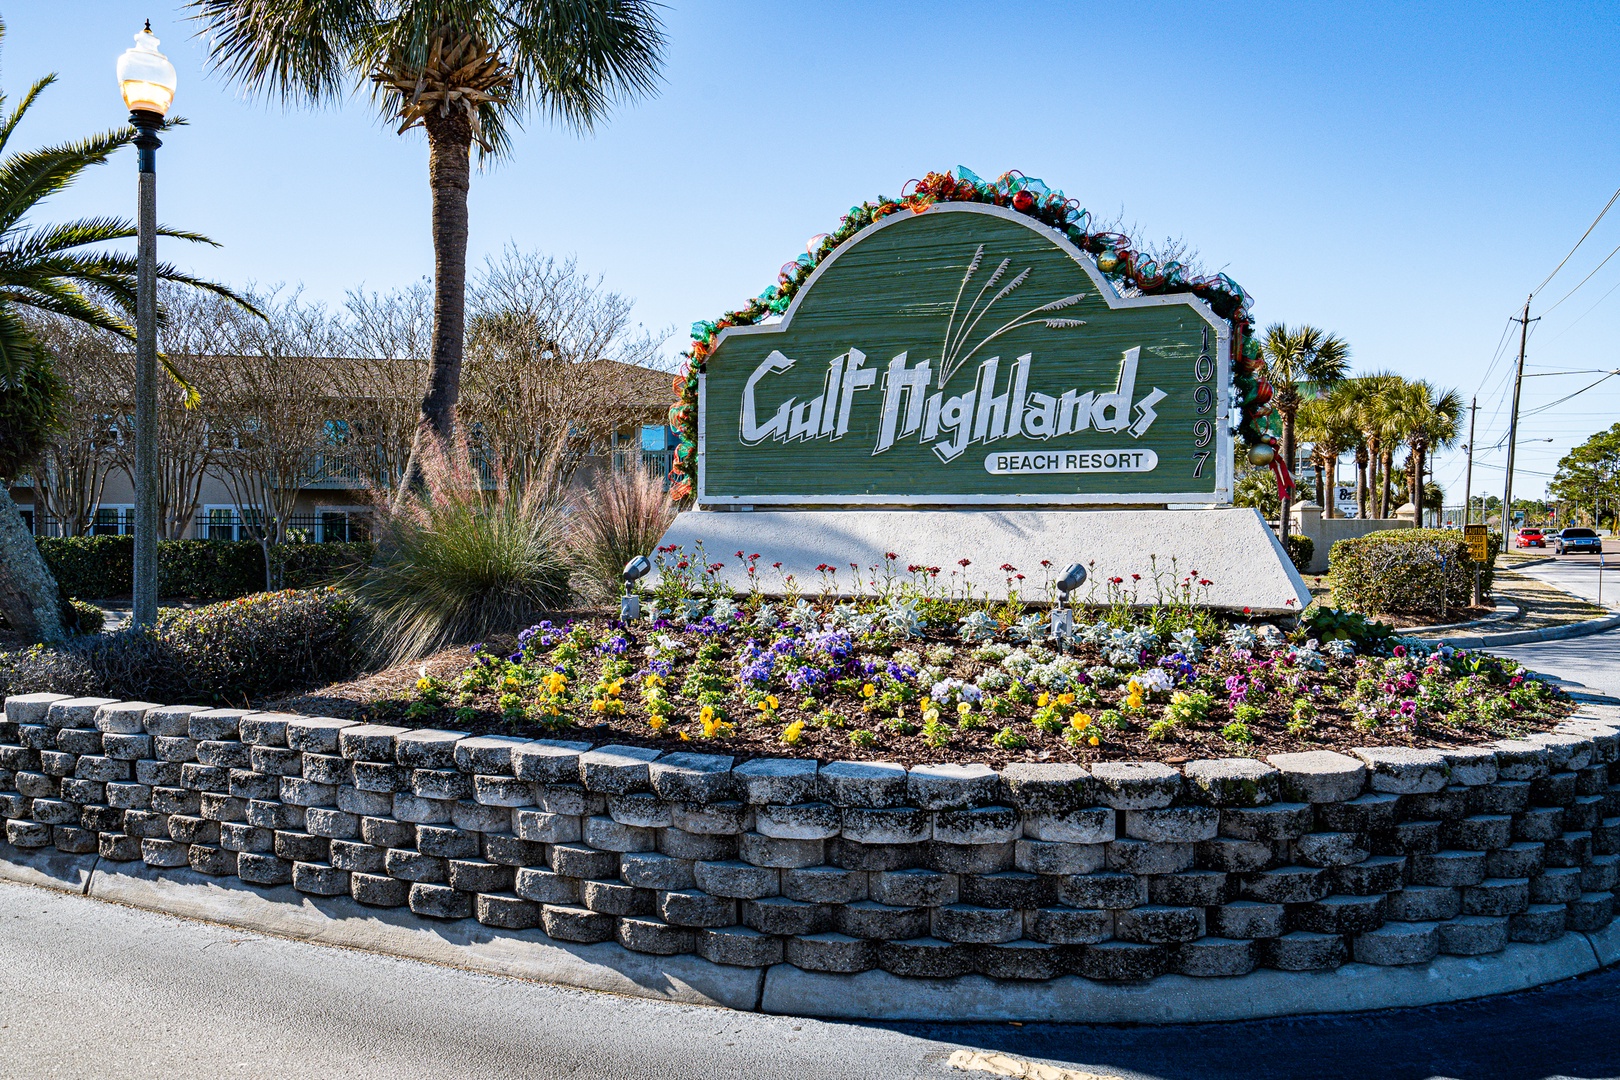 Enjoy your stay at Gulf Highlands Beach Resort!